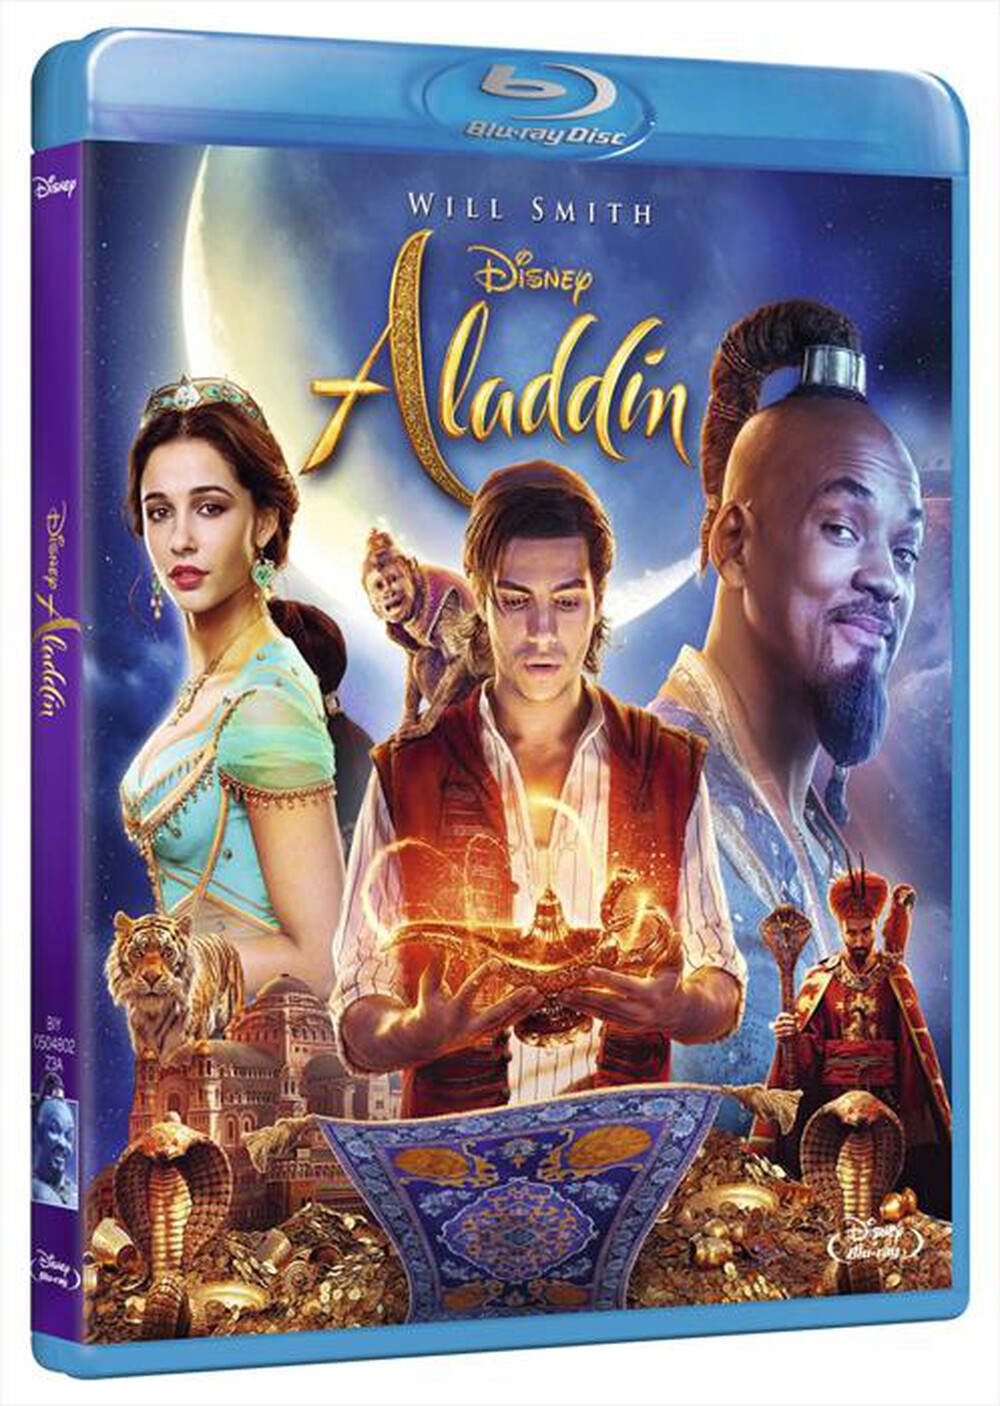 "WALT DISNEY - Aladdin (Live Action)"